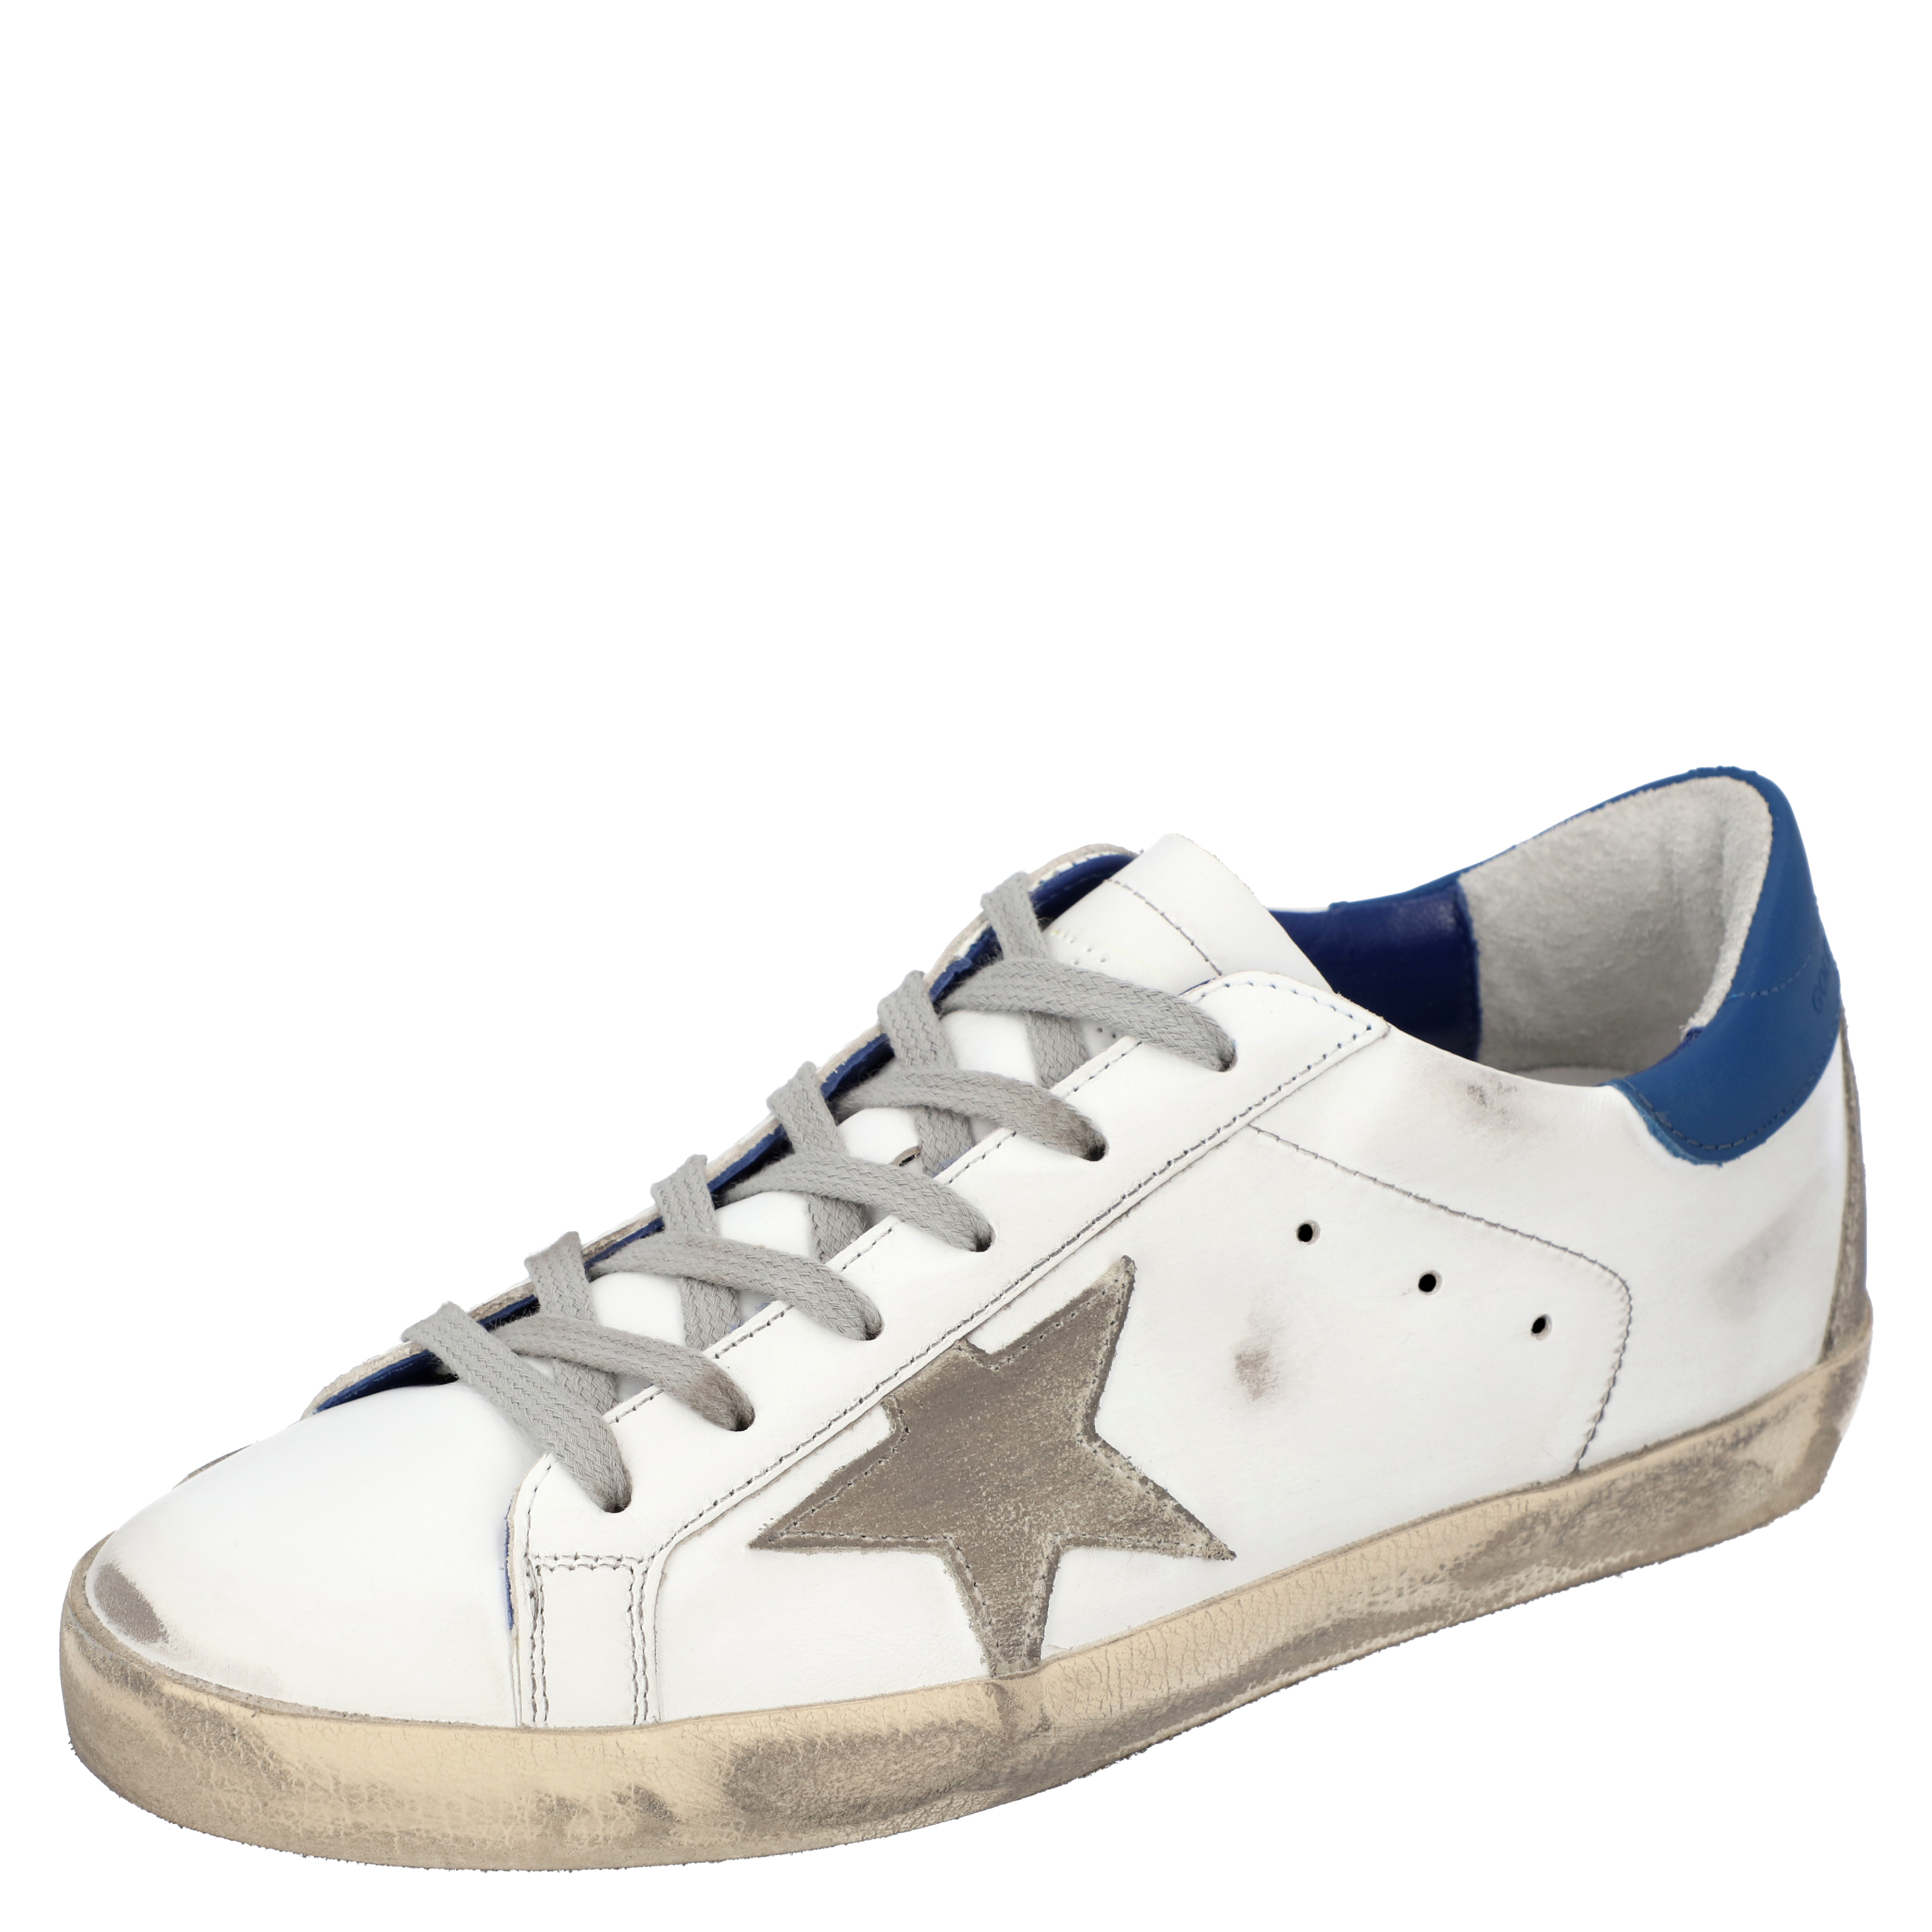 Golden Goose White/Blue Leather Superstar Sneaker Size EU 38